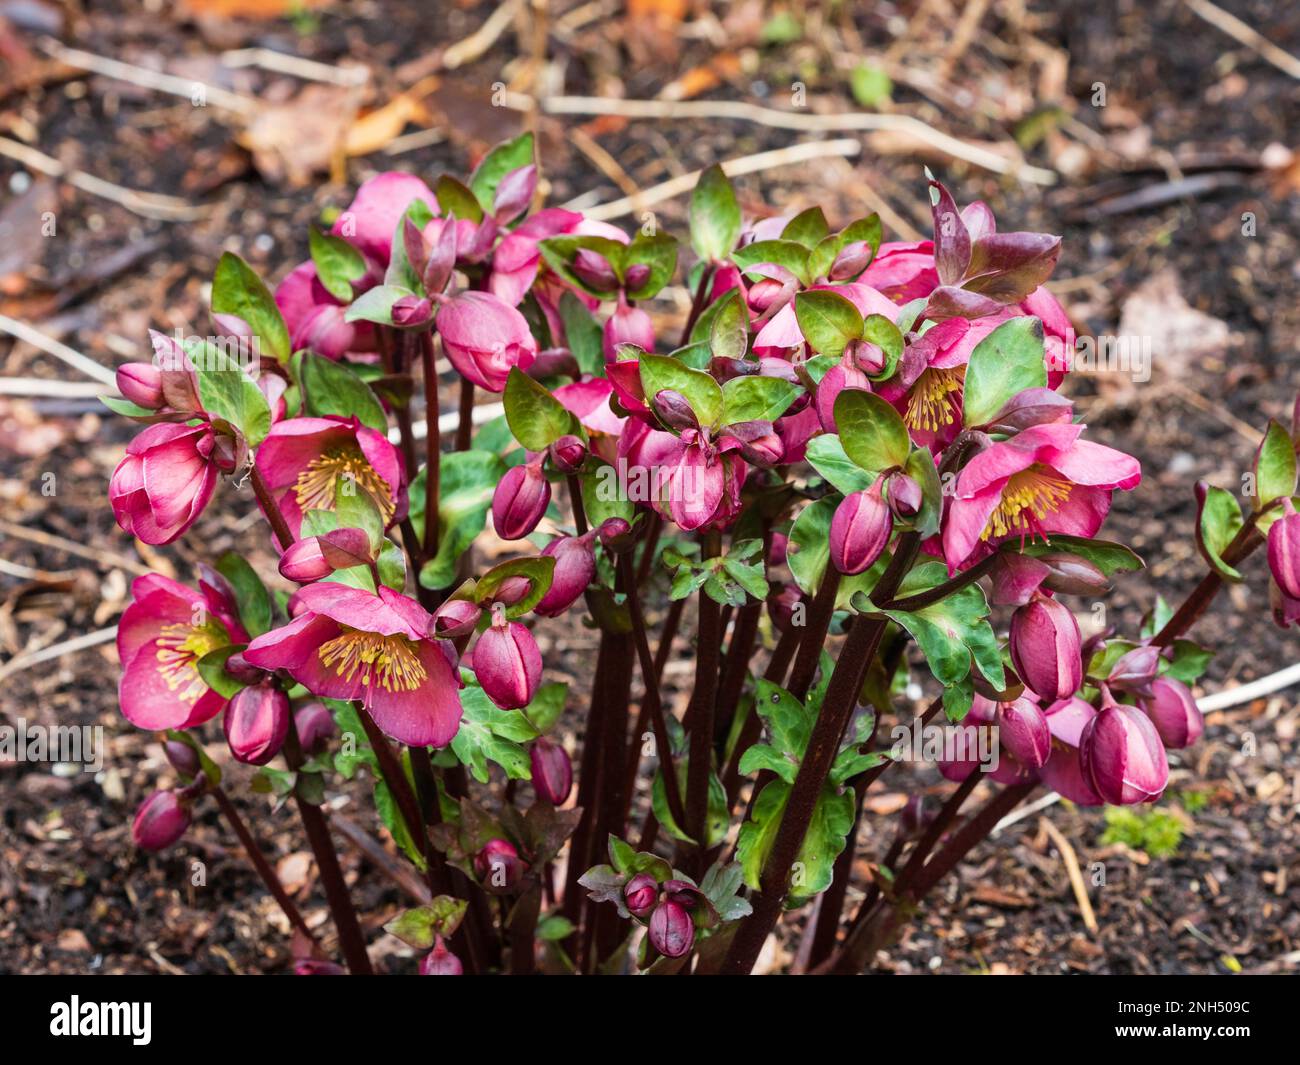 Pink February flowers of the winter flowering hardy hellebore, Helleborus x hybridus 'Penny's Pink' Stock Photo